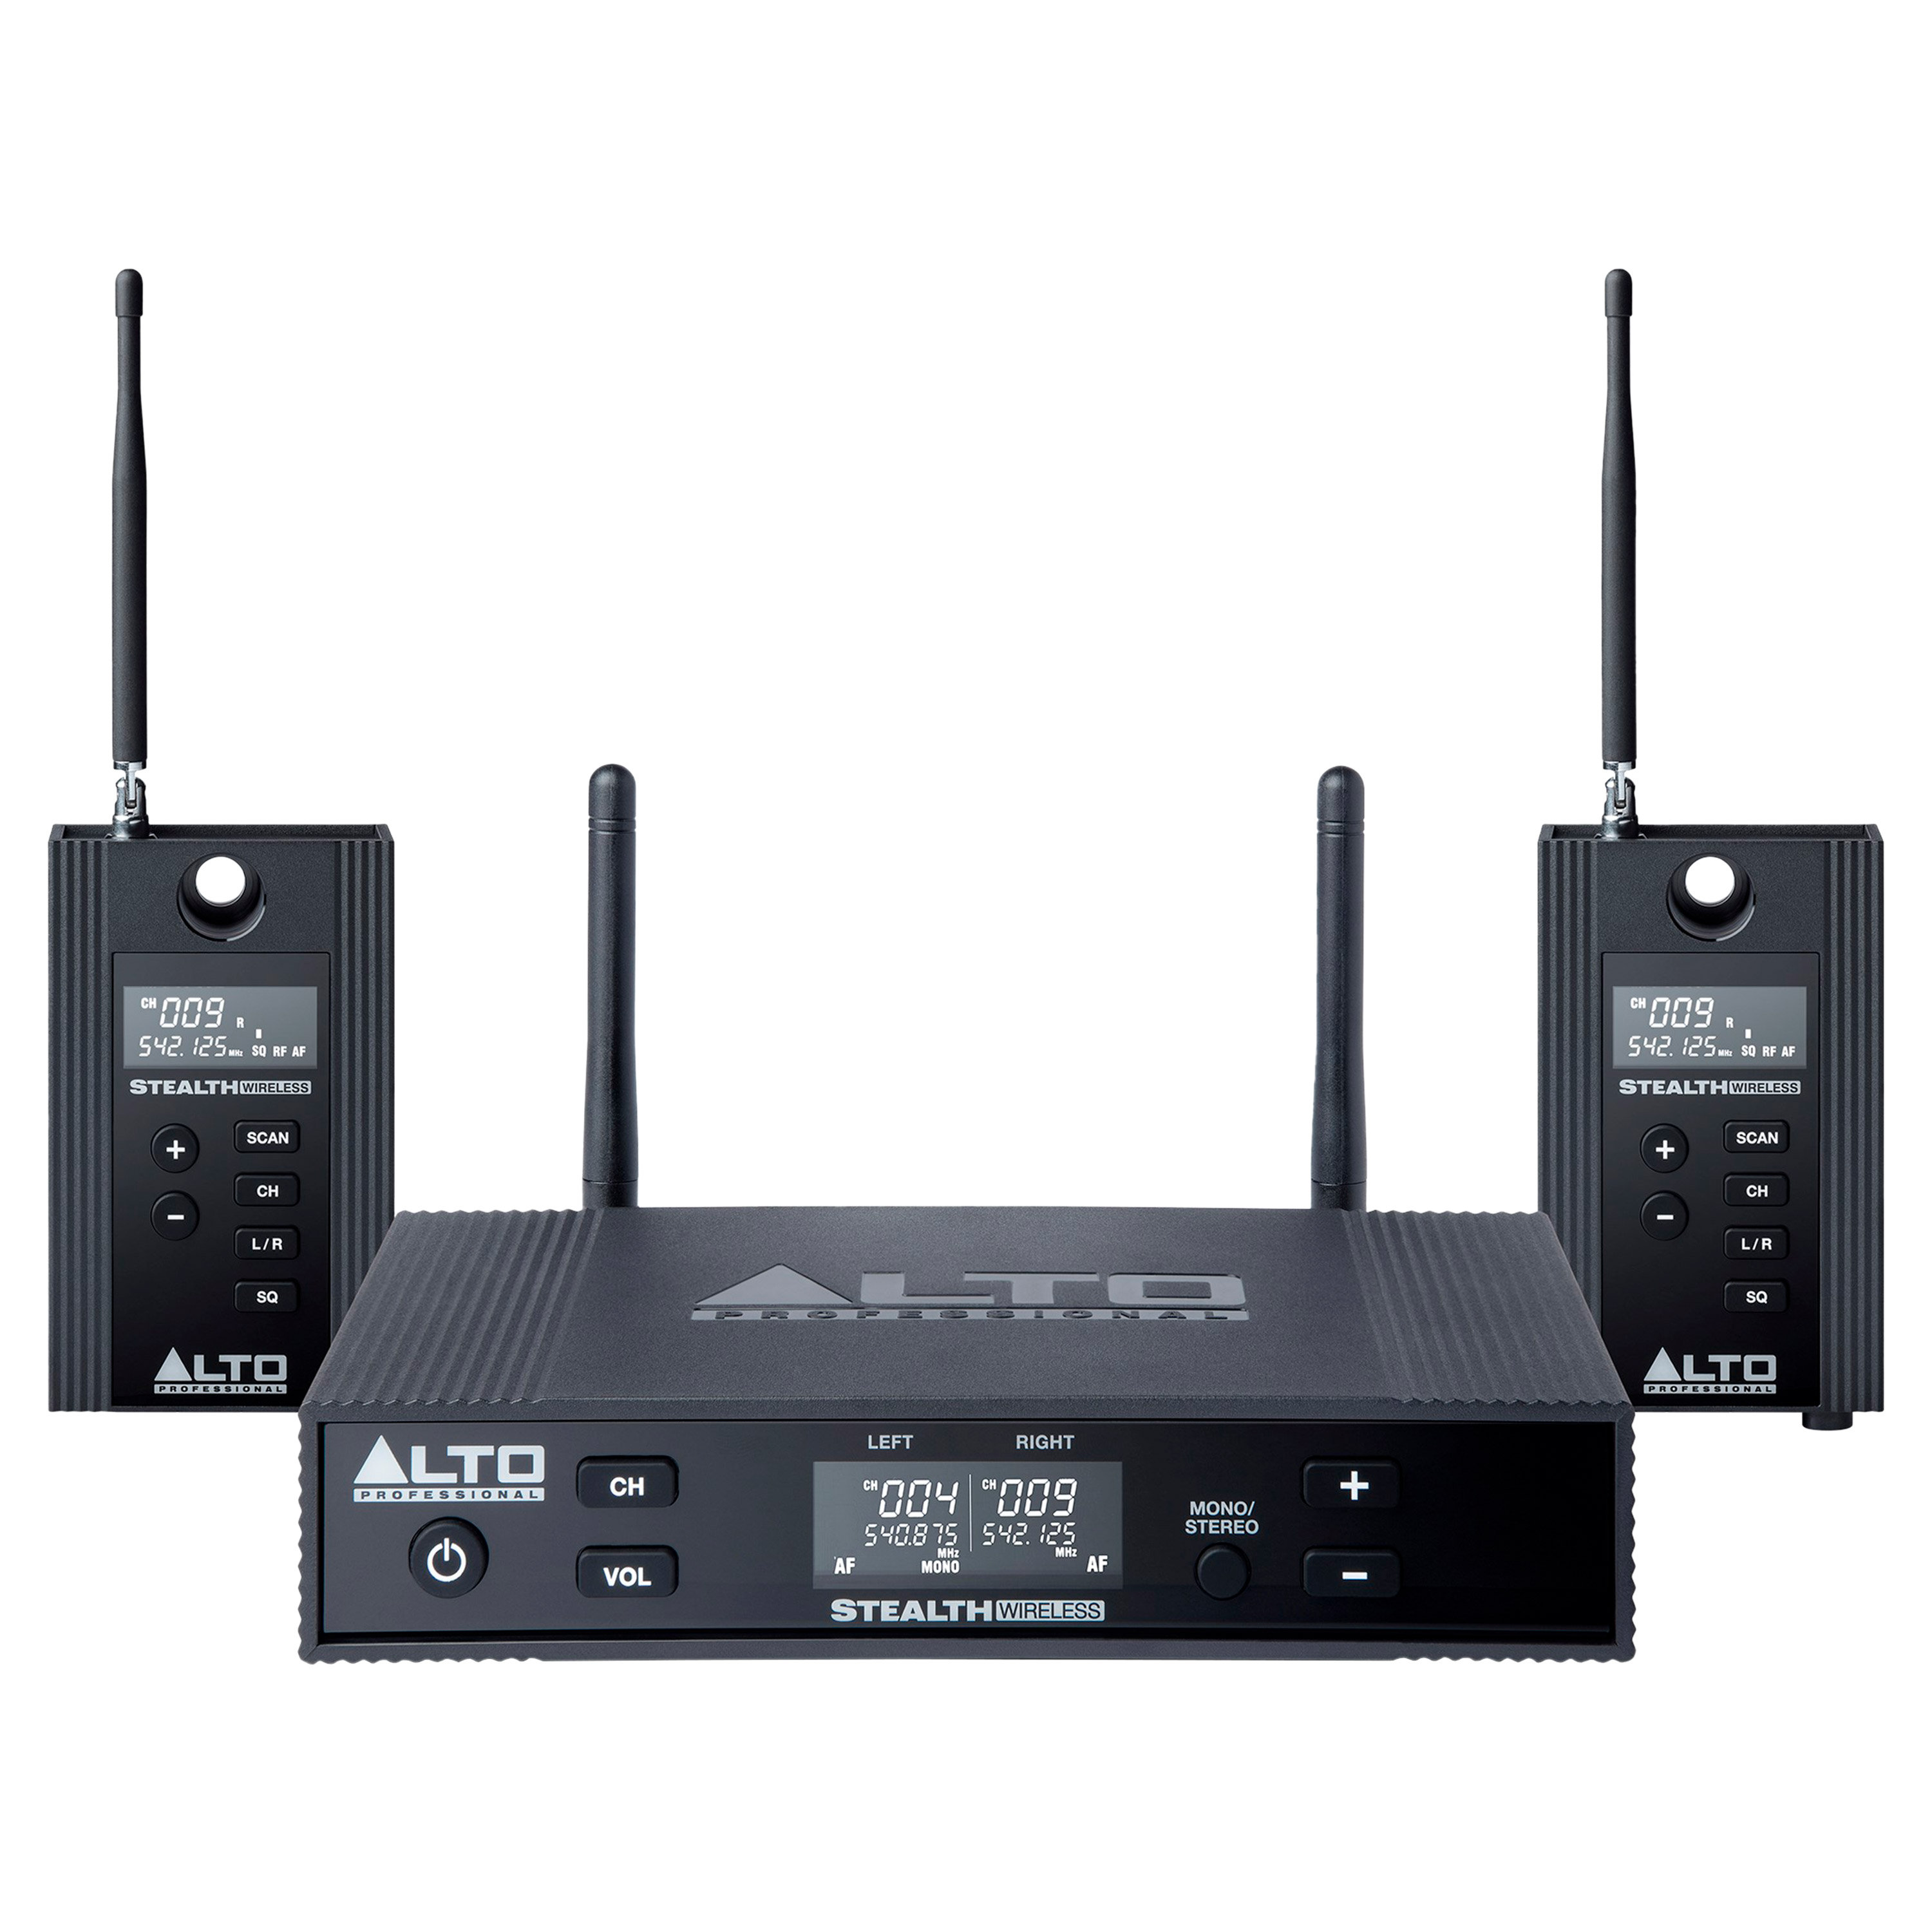 ALTO Stealth Wireless MKII